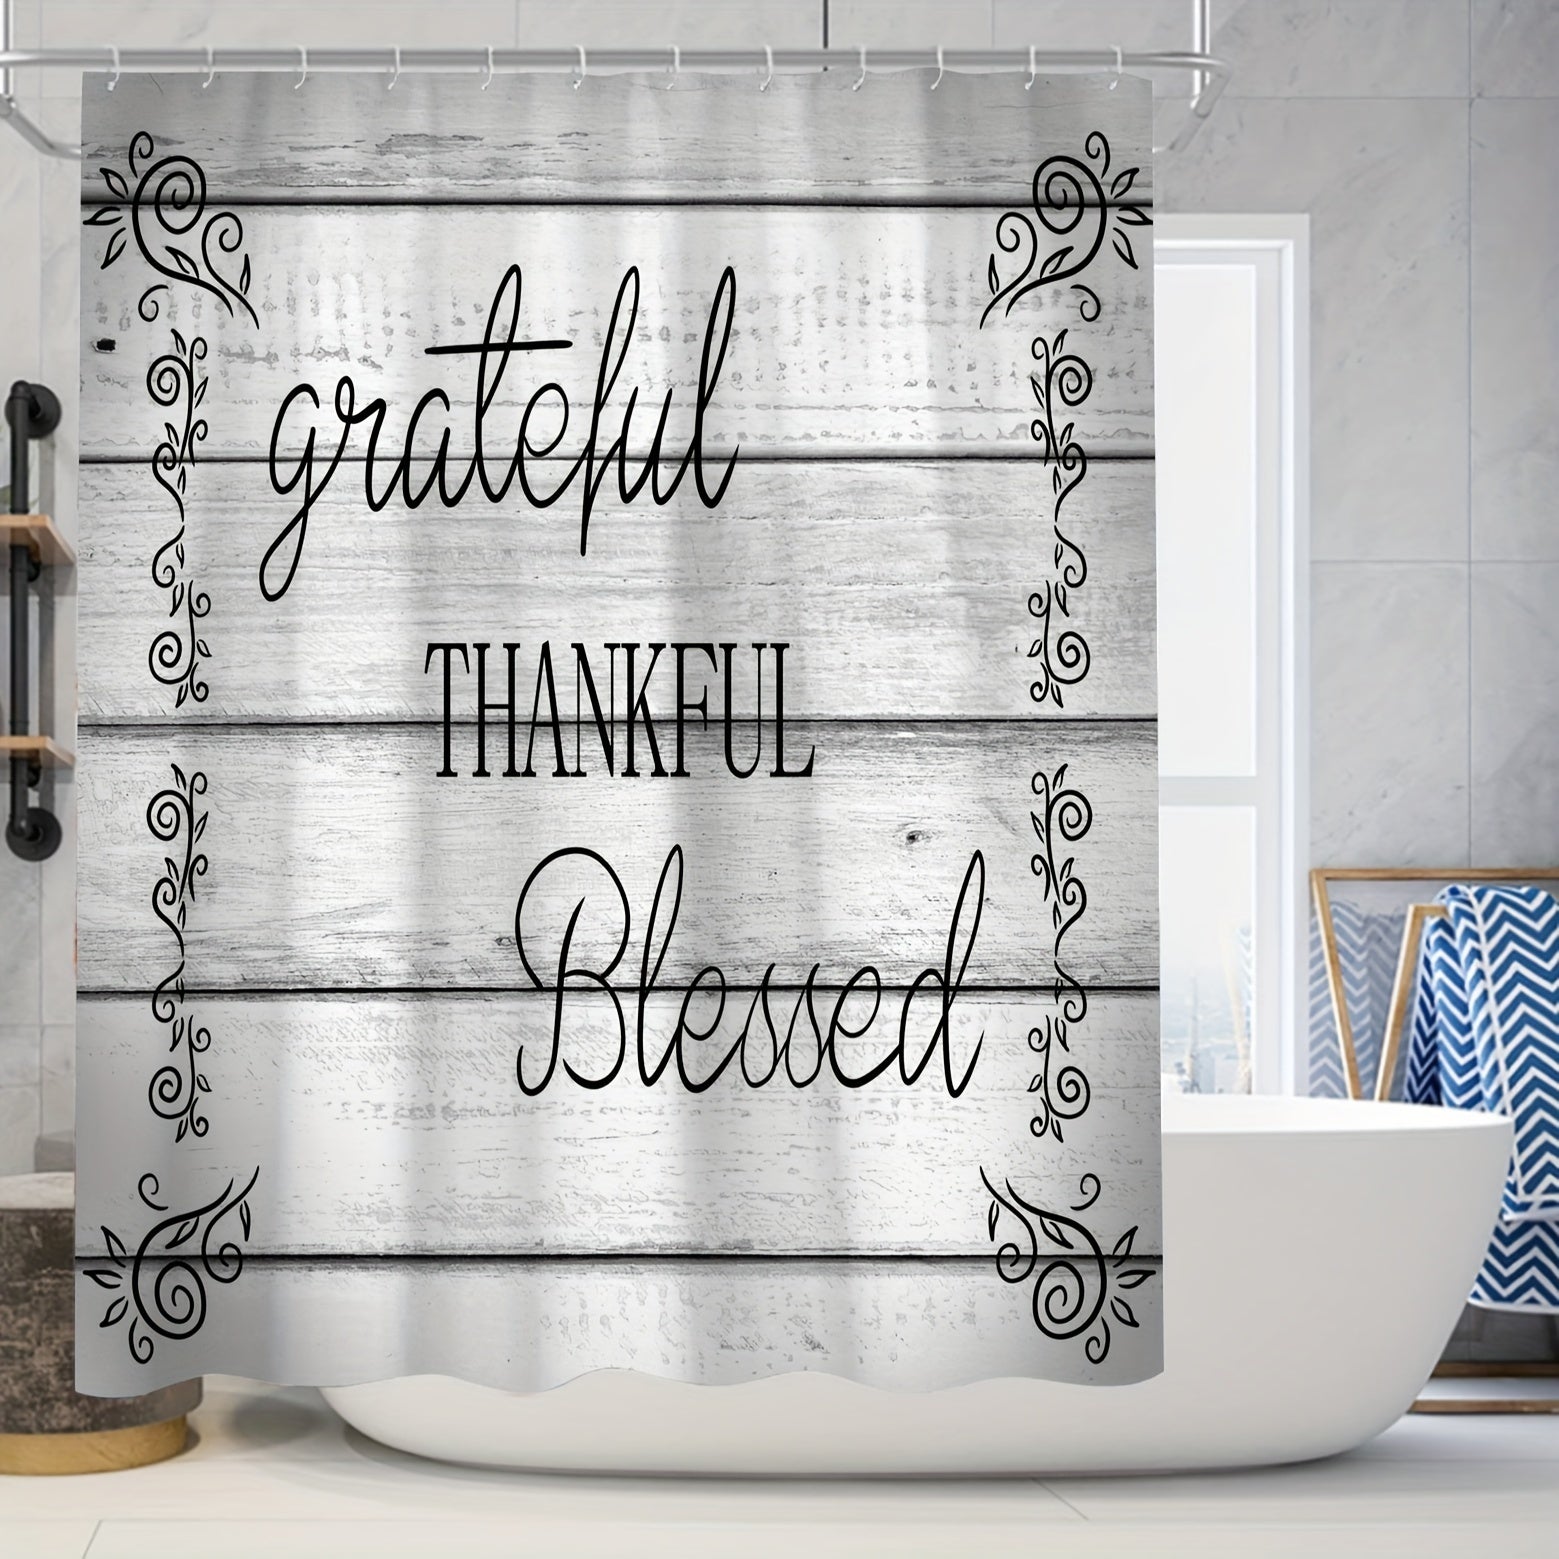 Grateful Thankful Blessed Christian Shower Curtain Set With 12 Hooks, Shower Mat, & Toilet Carpet claimedbygoddesigns